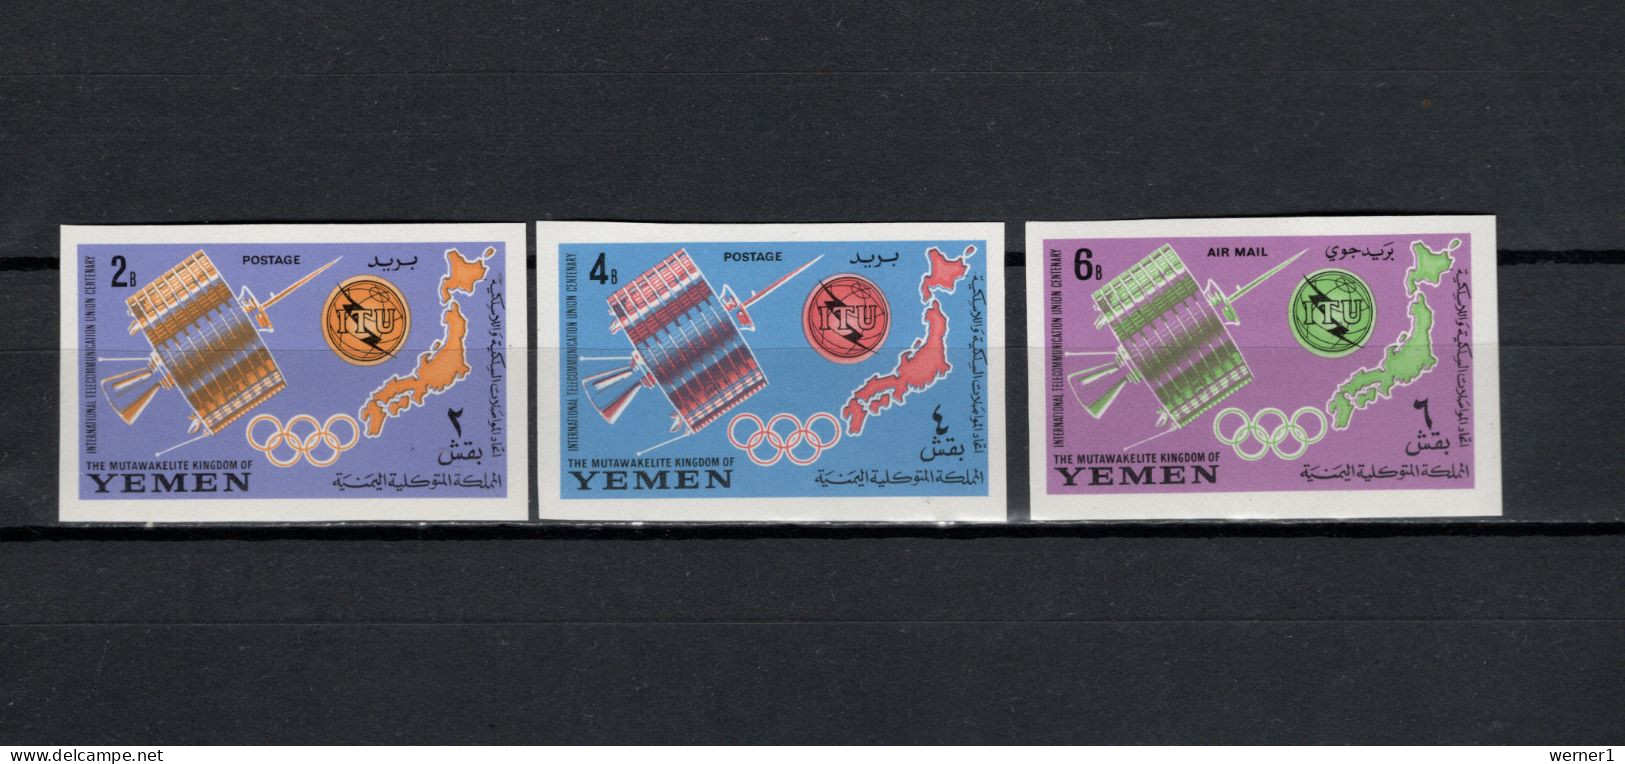 Yemen Kingdom 1965 Space, ITU Centenary, Olympic Games Tokyo Set Of 3 Imperf. MNH - Azië